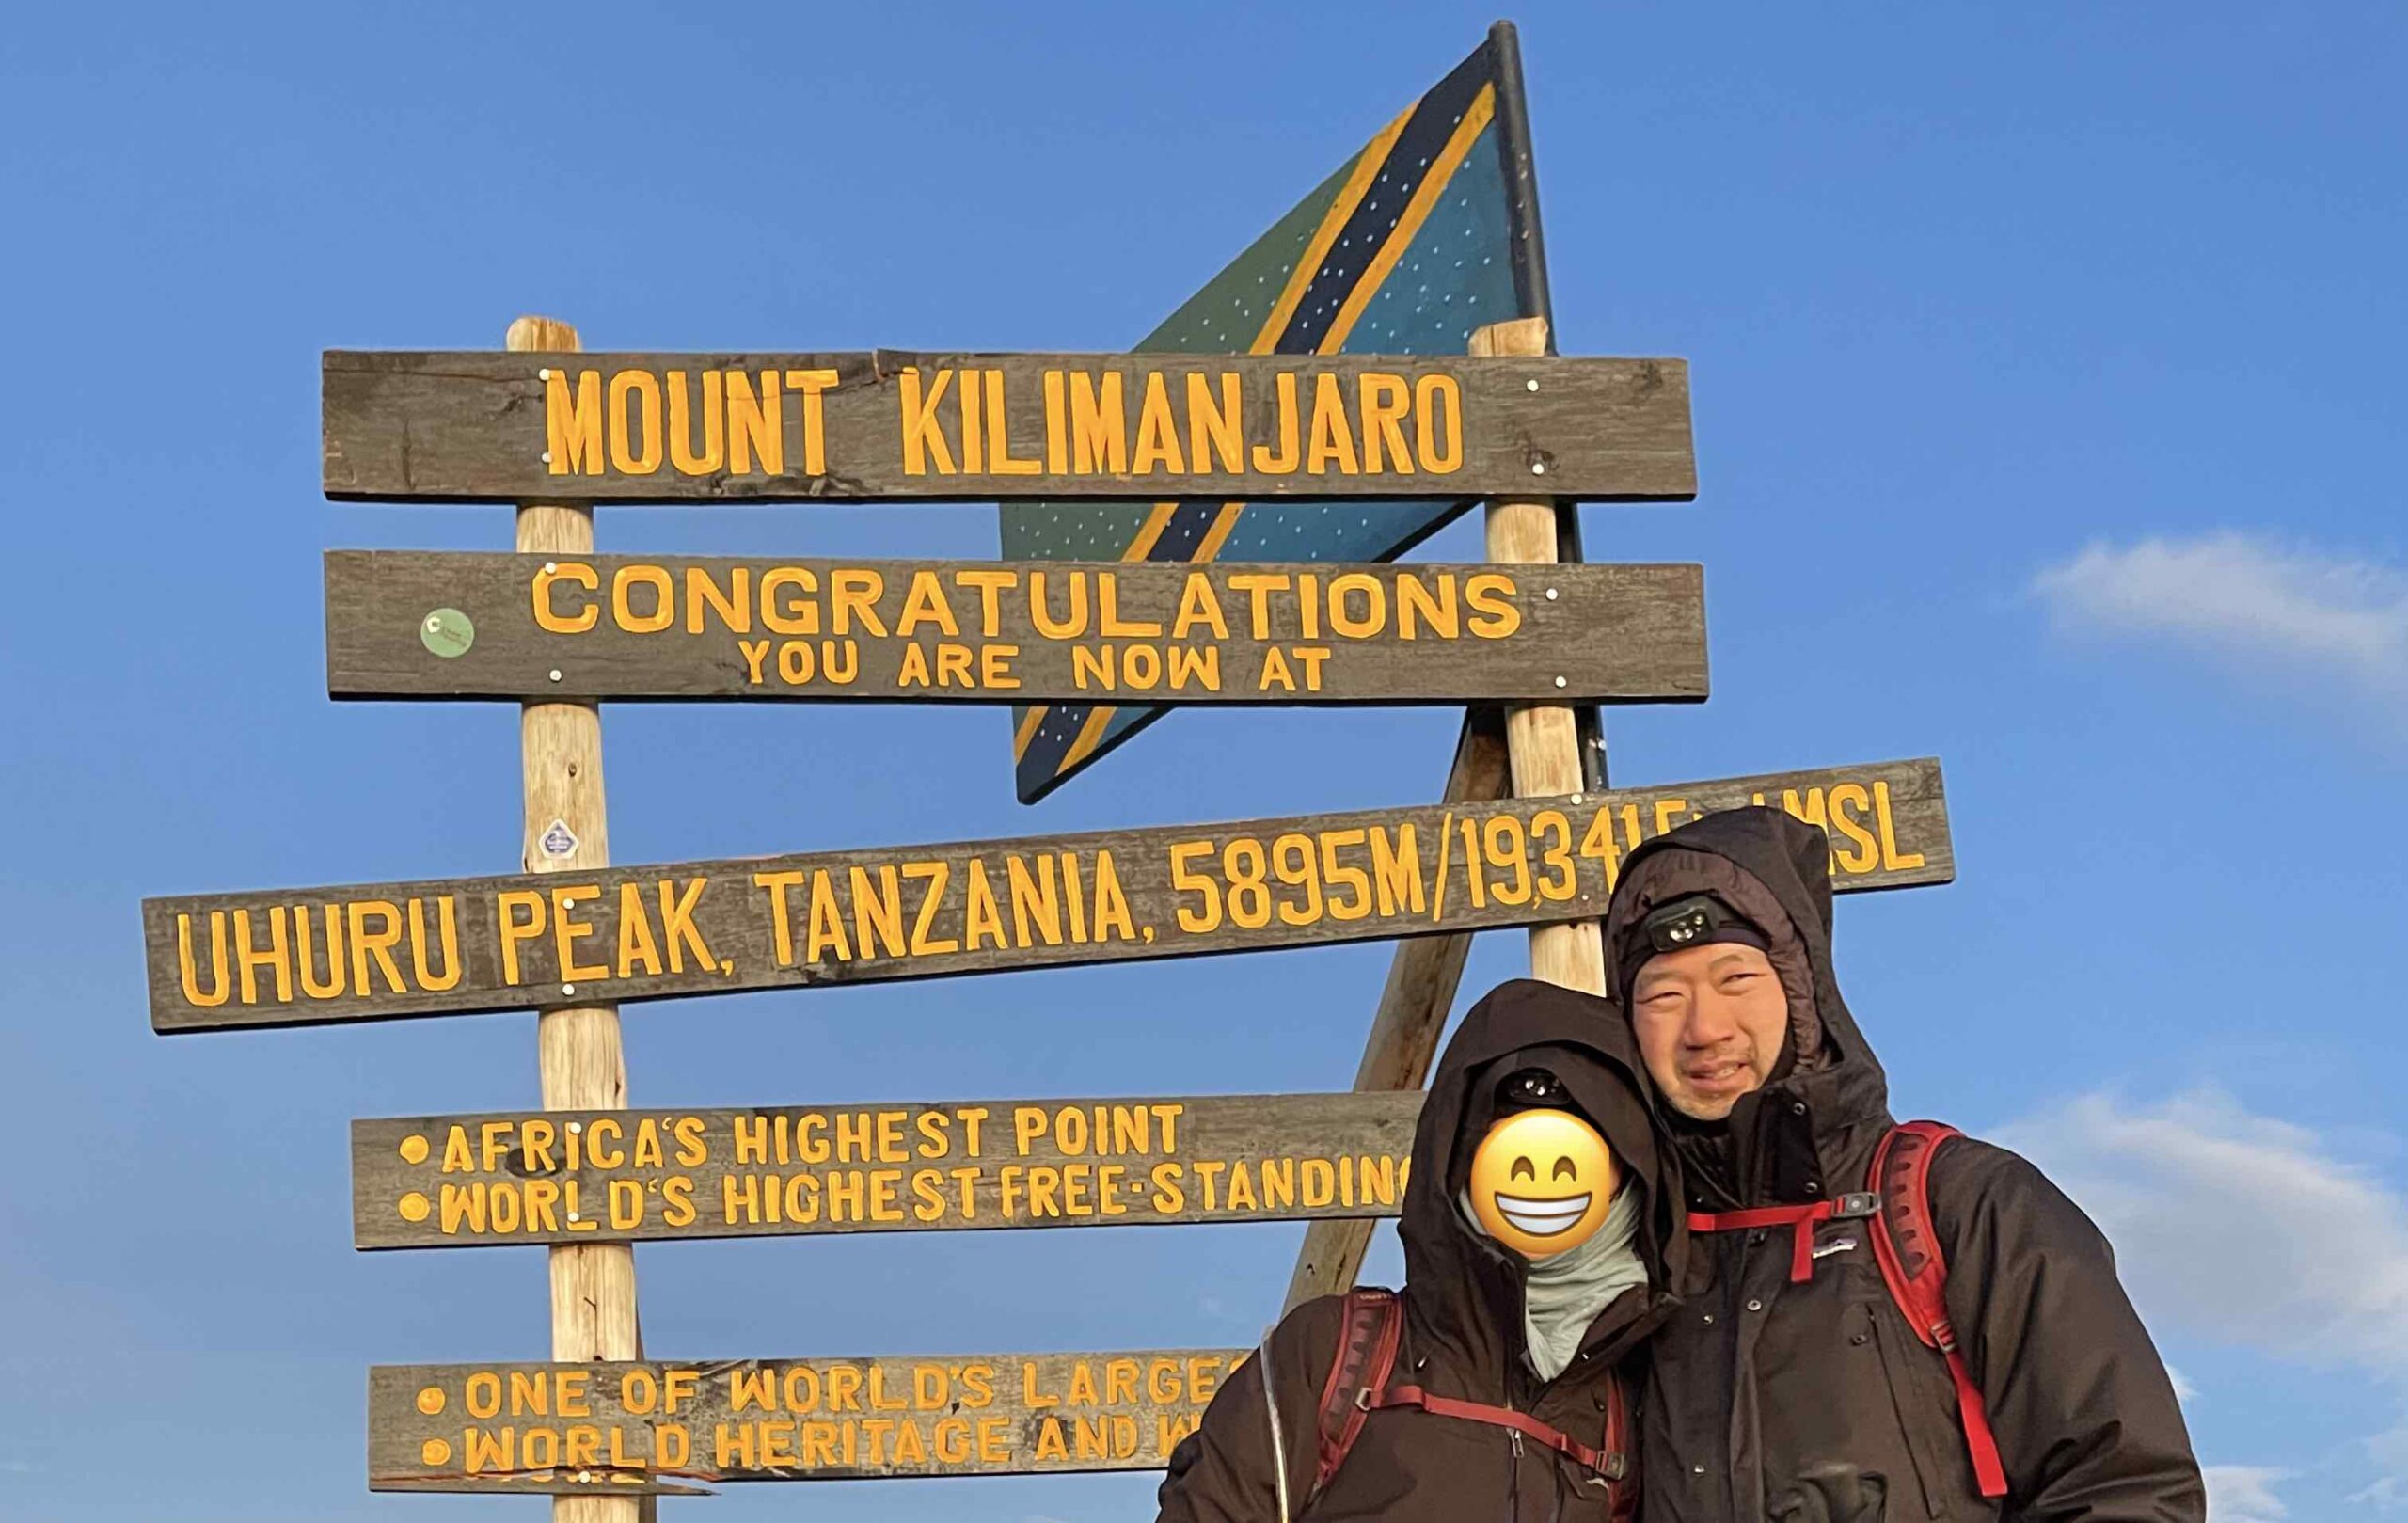 Peter Kim at the summit of Mount Kilimanjaro